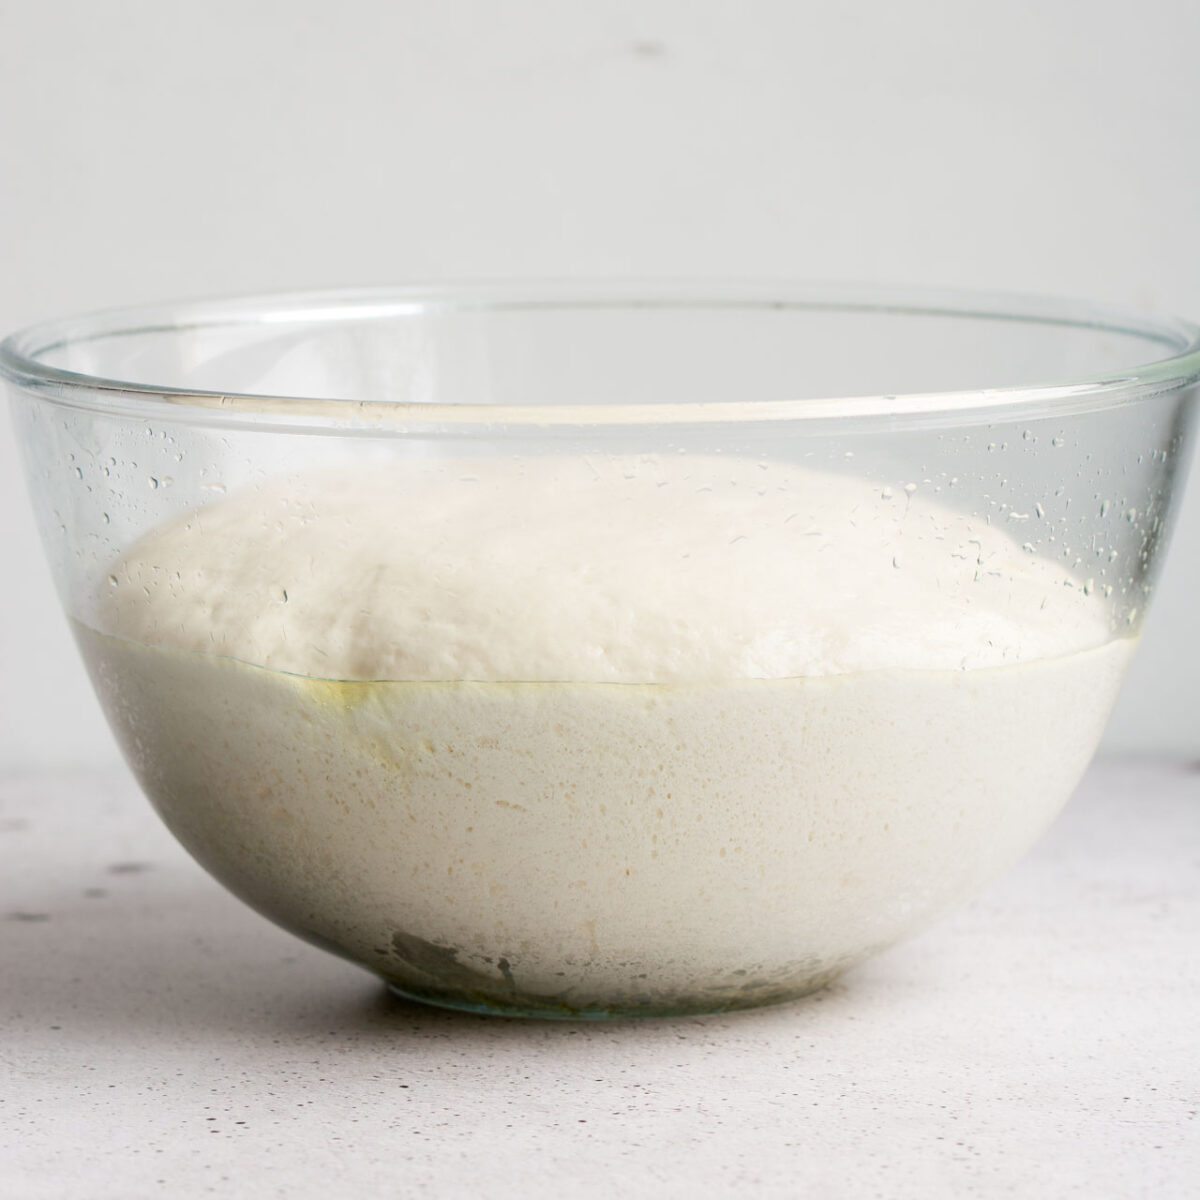 Risen dough in a mixing bowl.